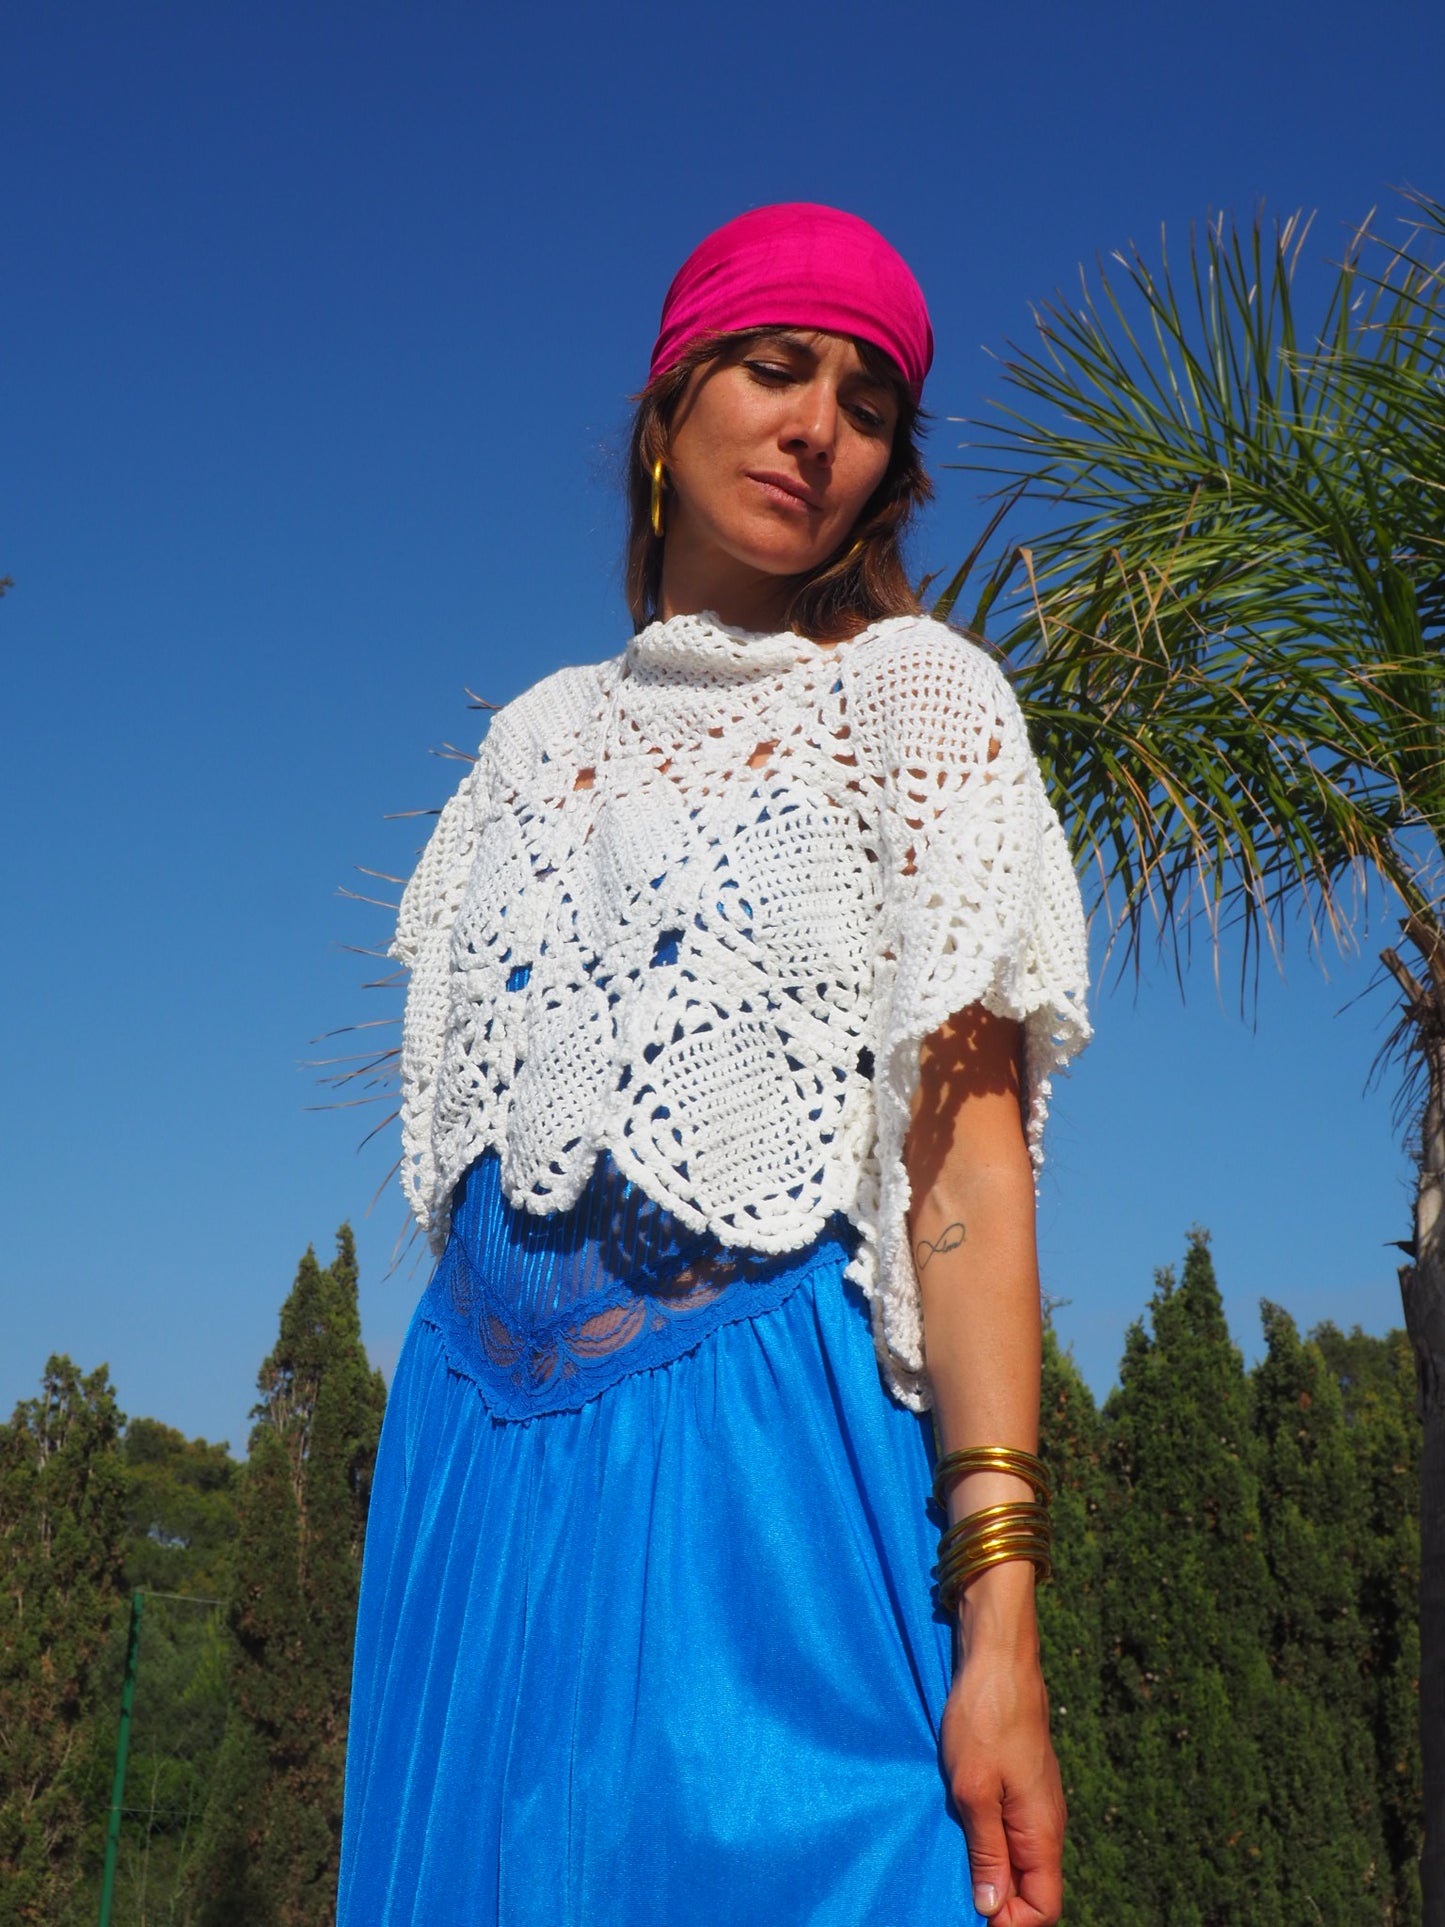 Antique handmade lace crochet up-cycled top by Vagabond Ibiza | vagabond ibiza